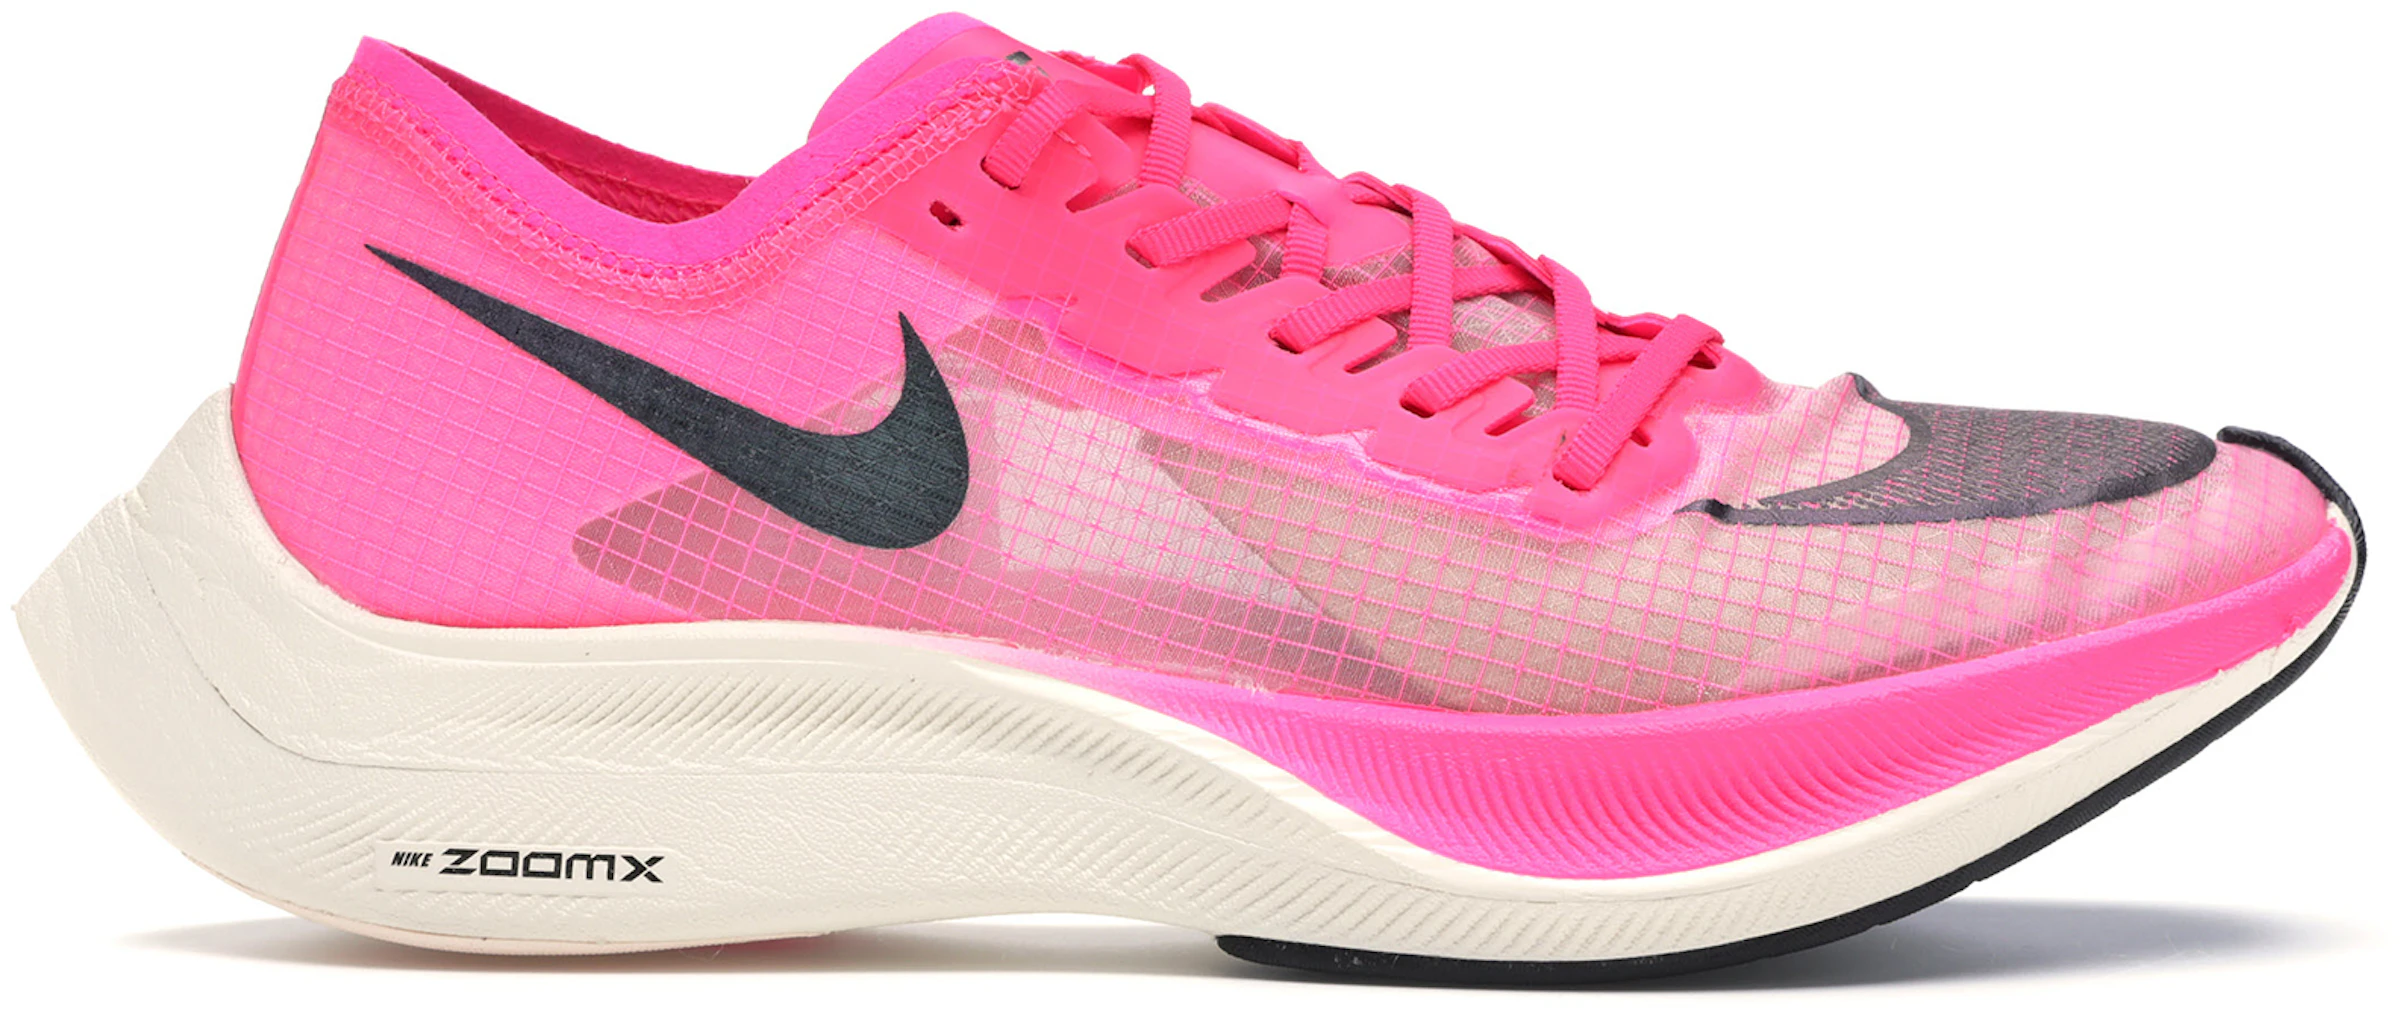 arcilla laberinto arena Nike ZoomX Vaporfly Next% Pink - AO4568-600 - ES